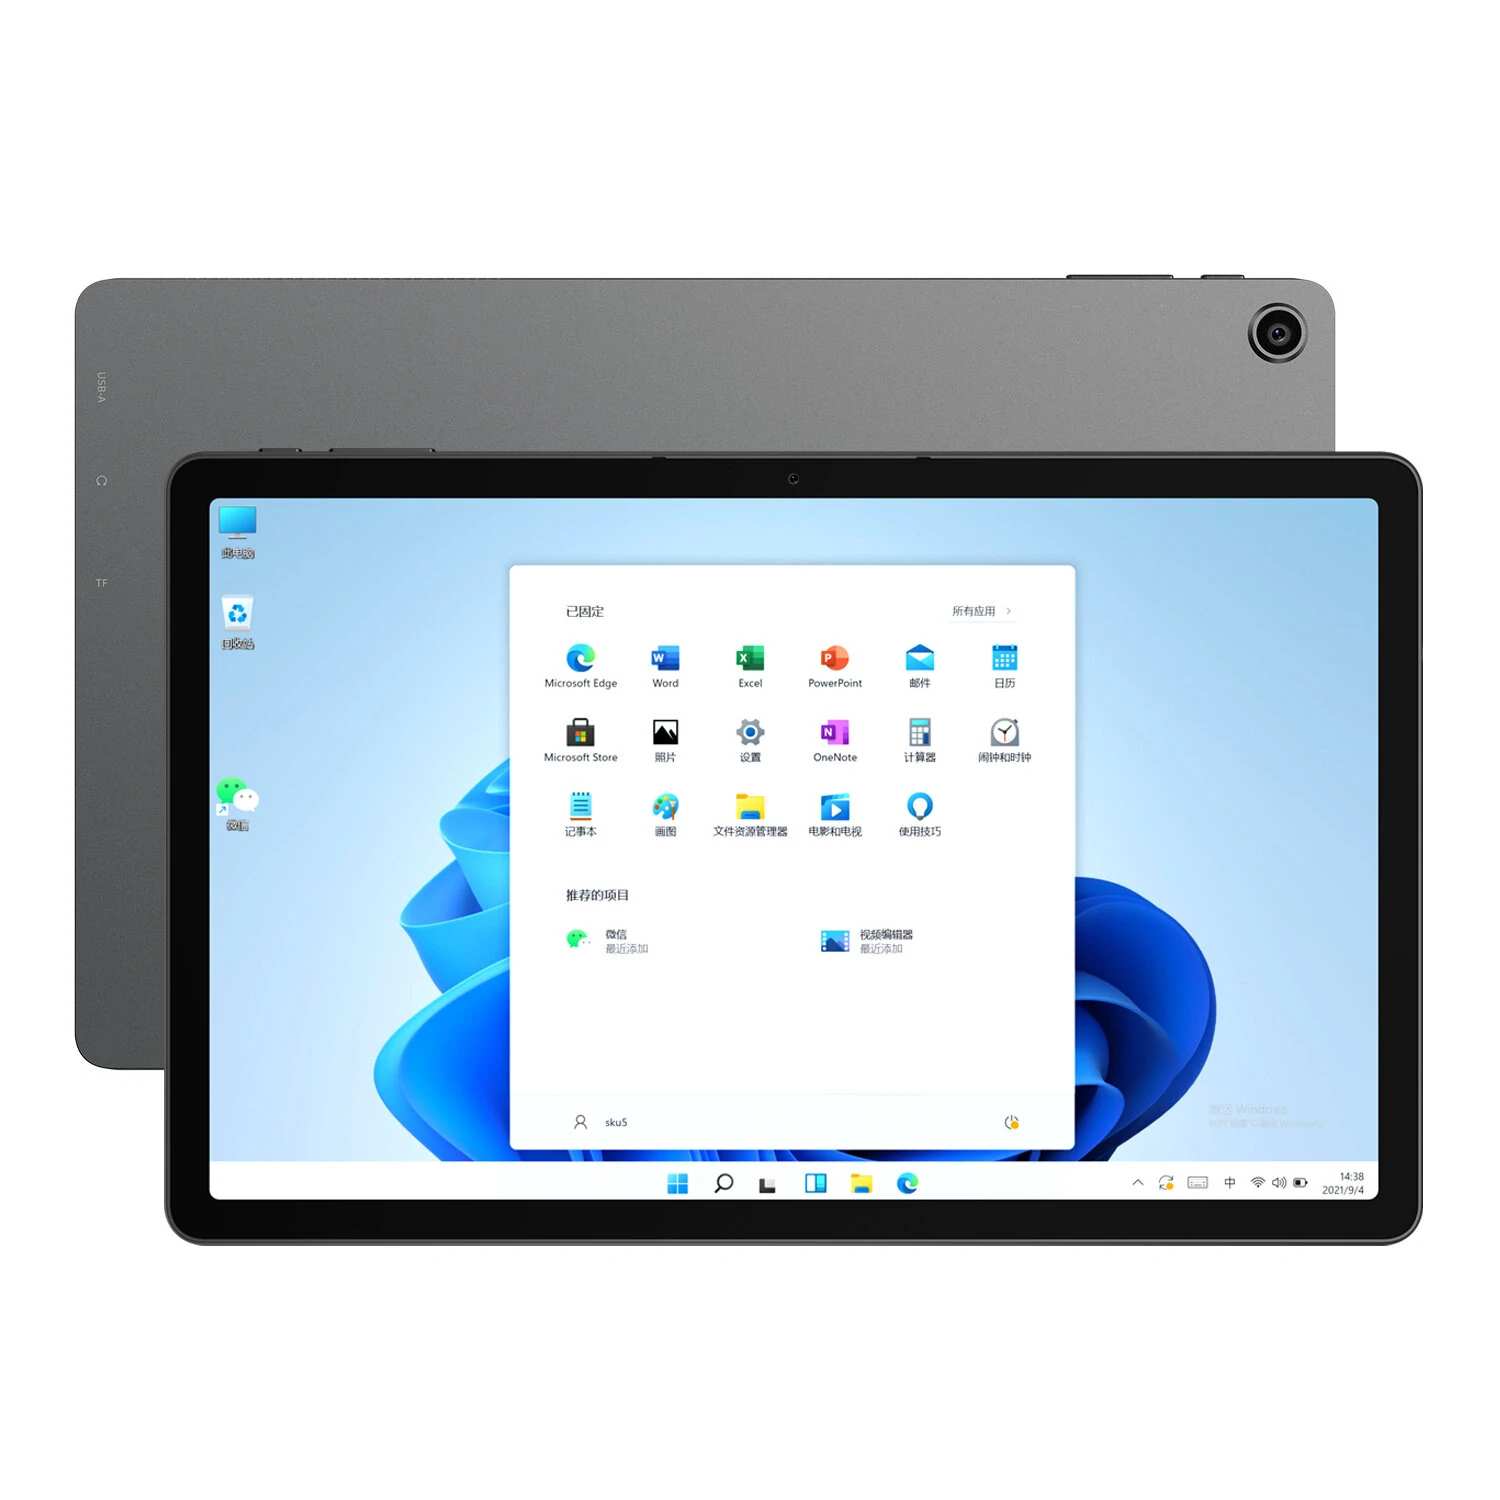 Alldocube iWork GT Intel I5-1115G7  Windows 11 Tablet Banggood Coupon Promo Code